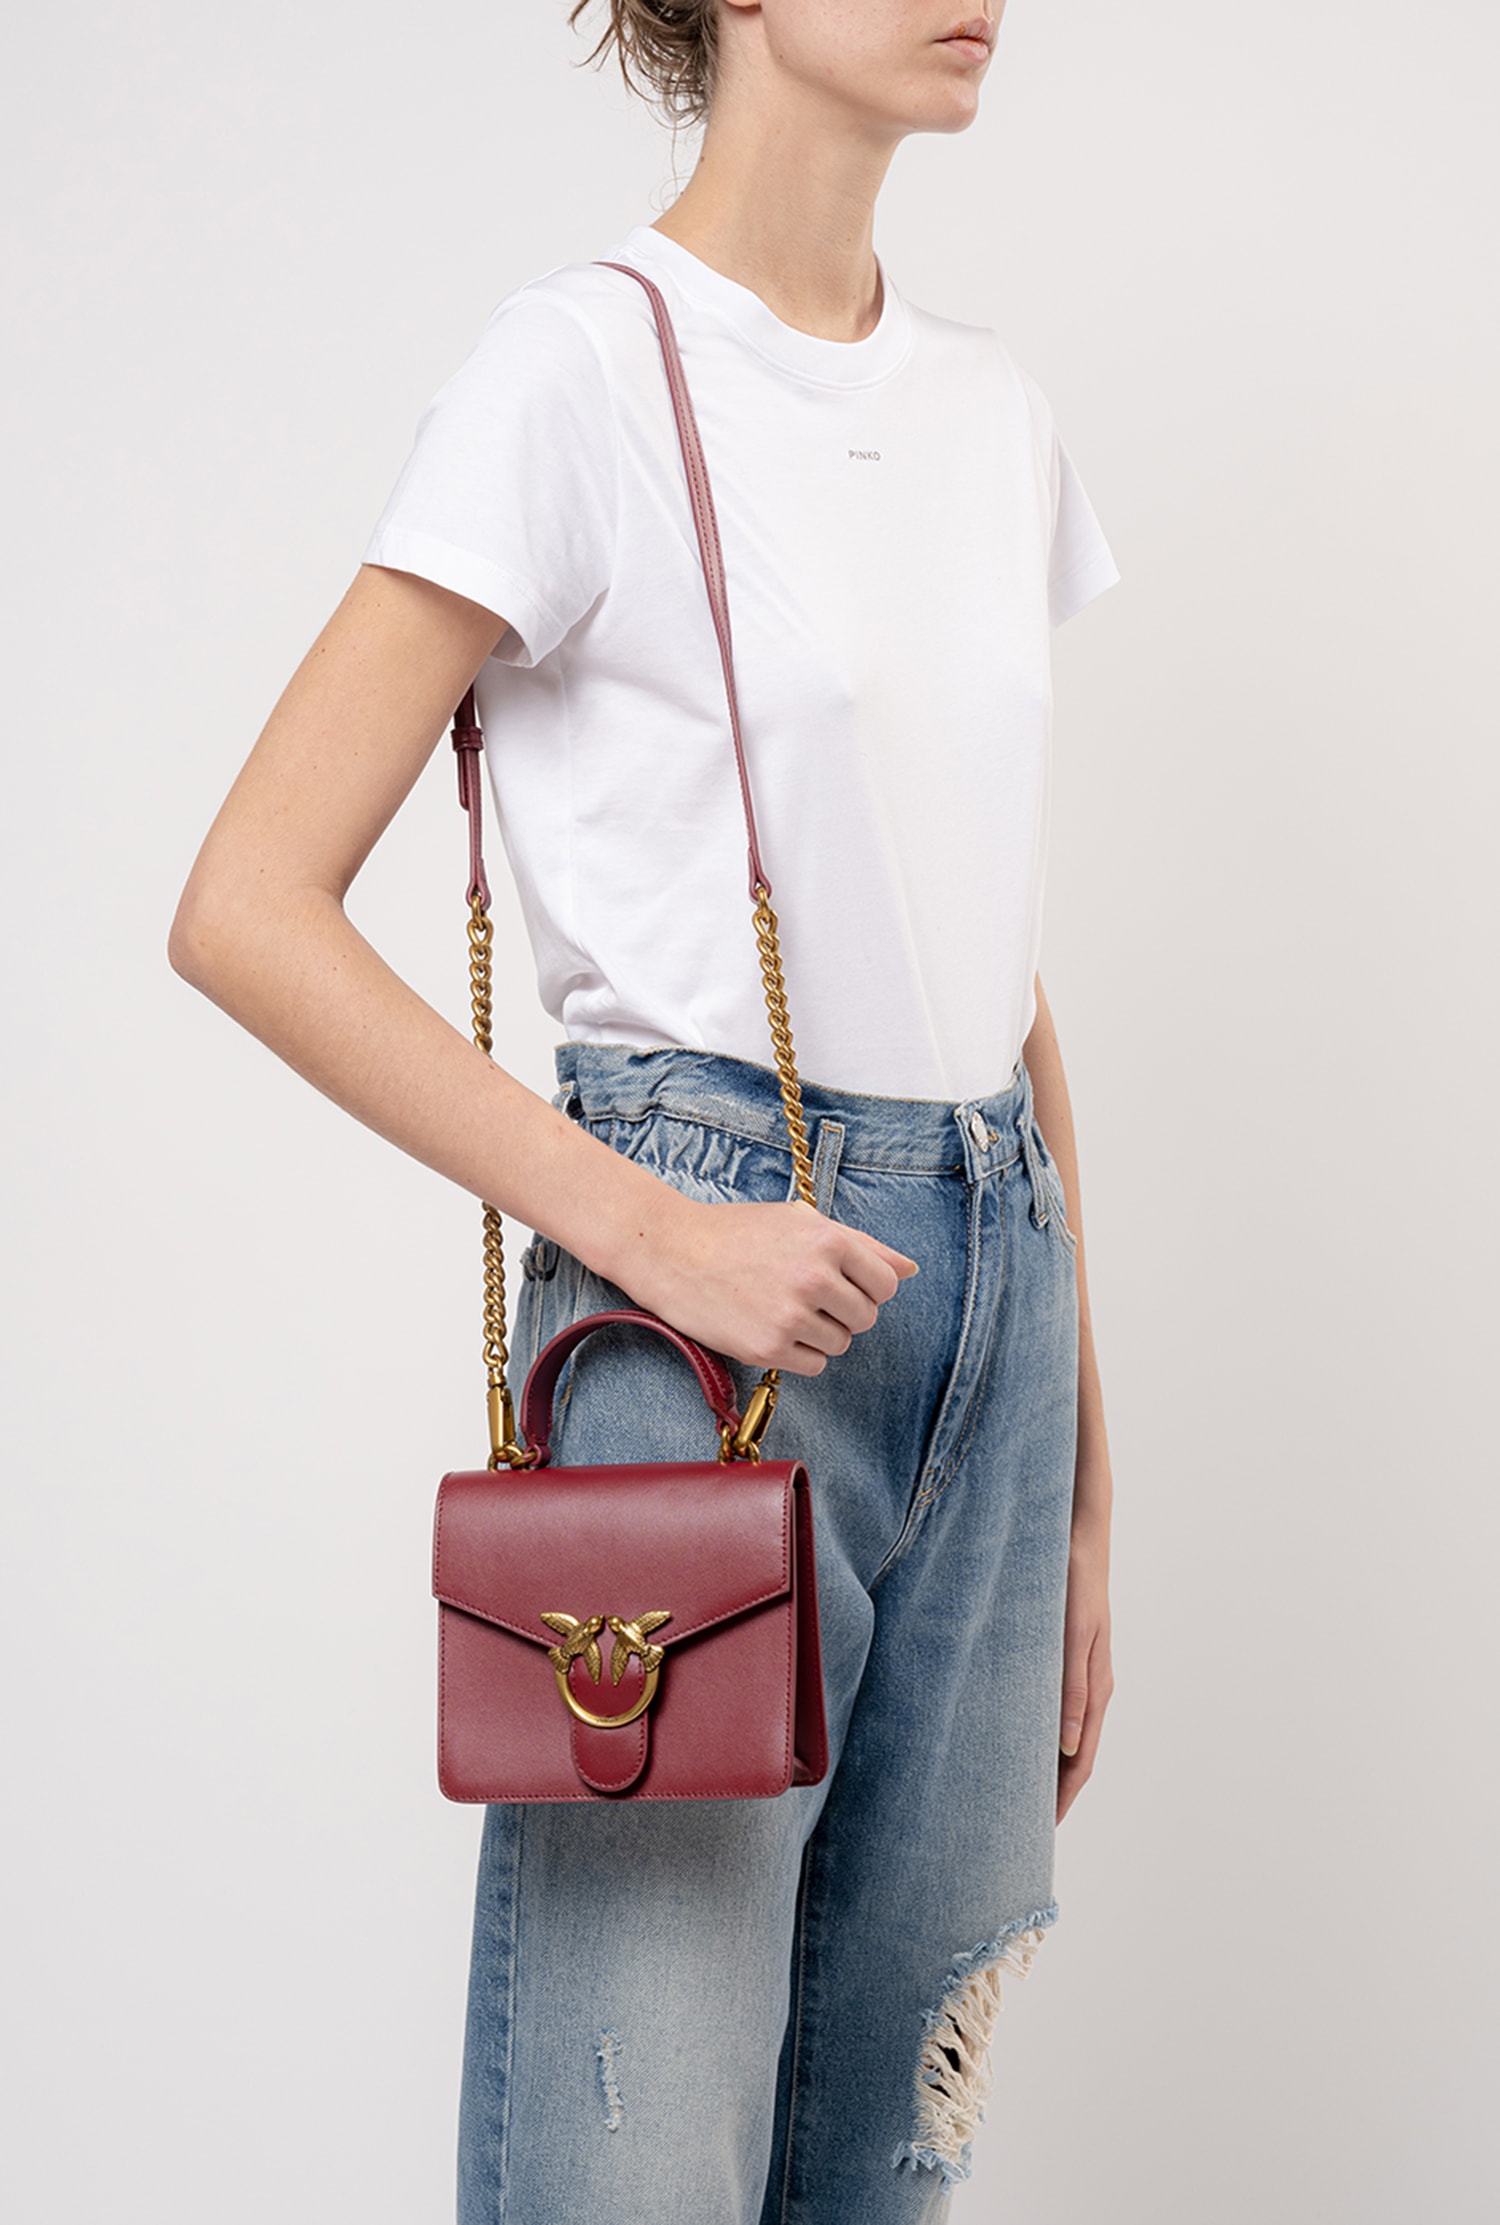 Mini Love Bag One Top Handle Light Simply PINKO → Shop Online